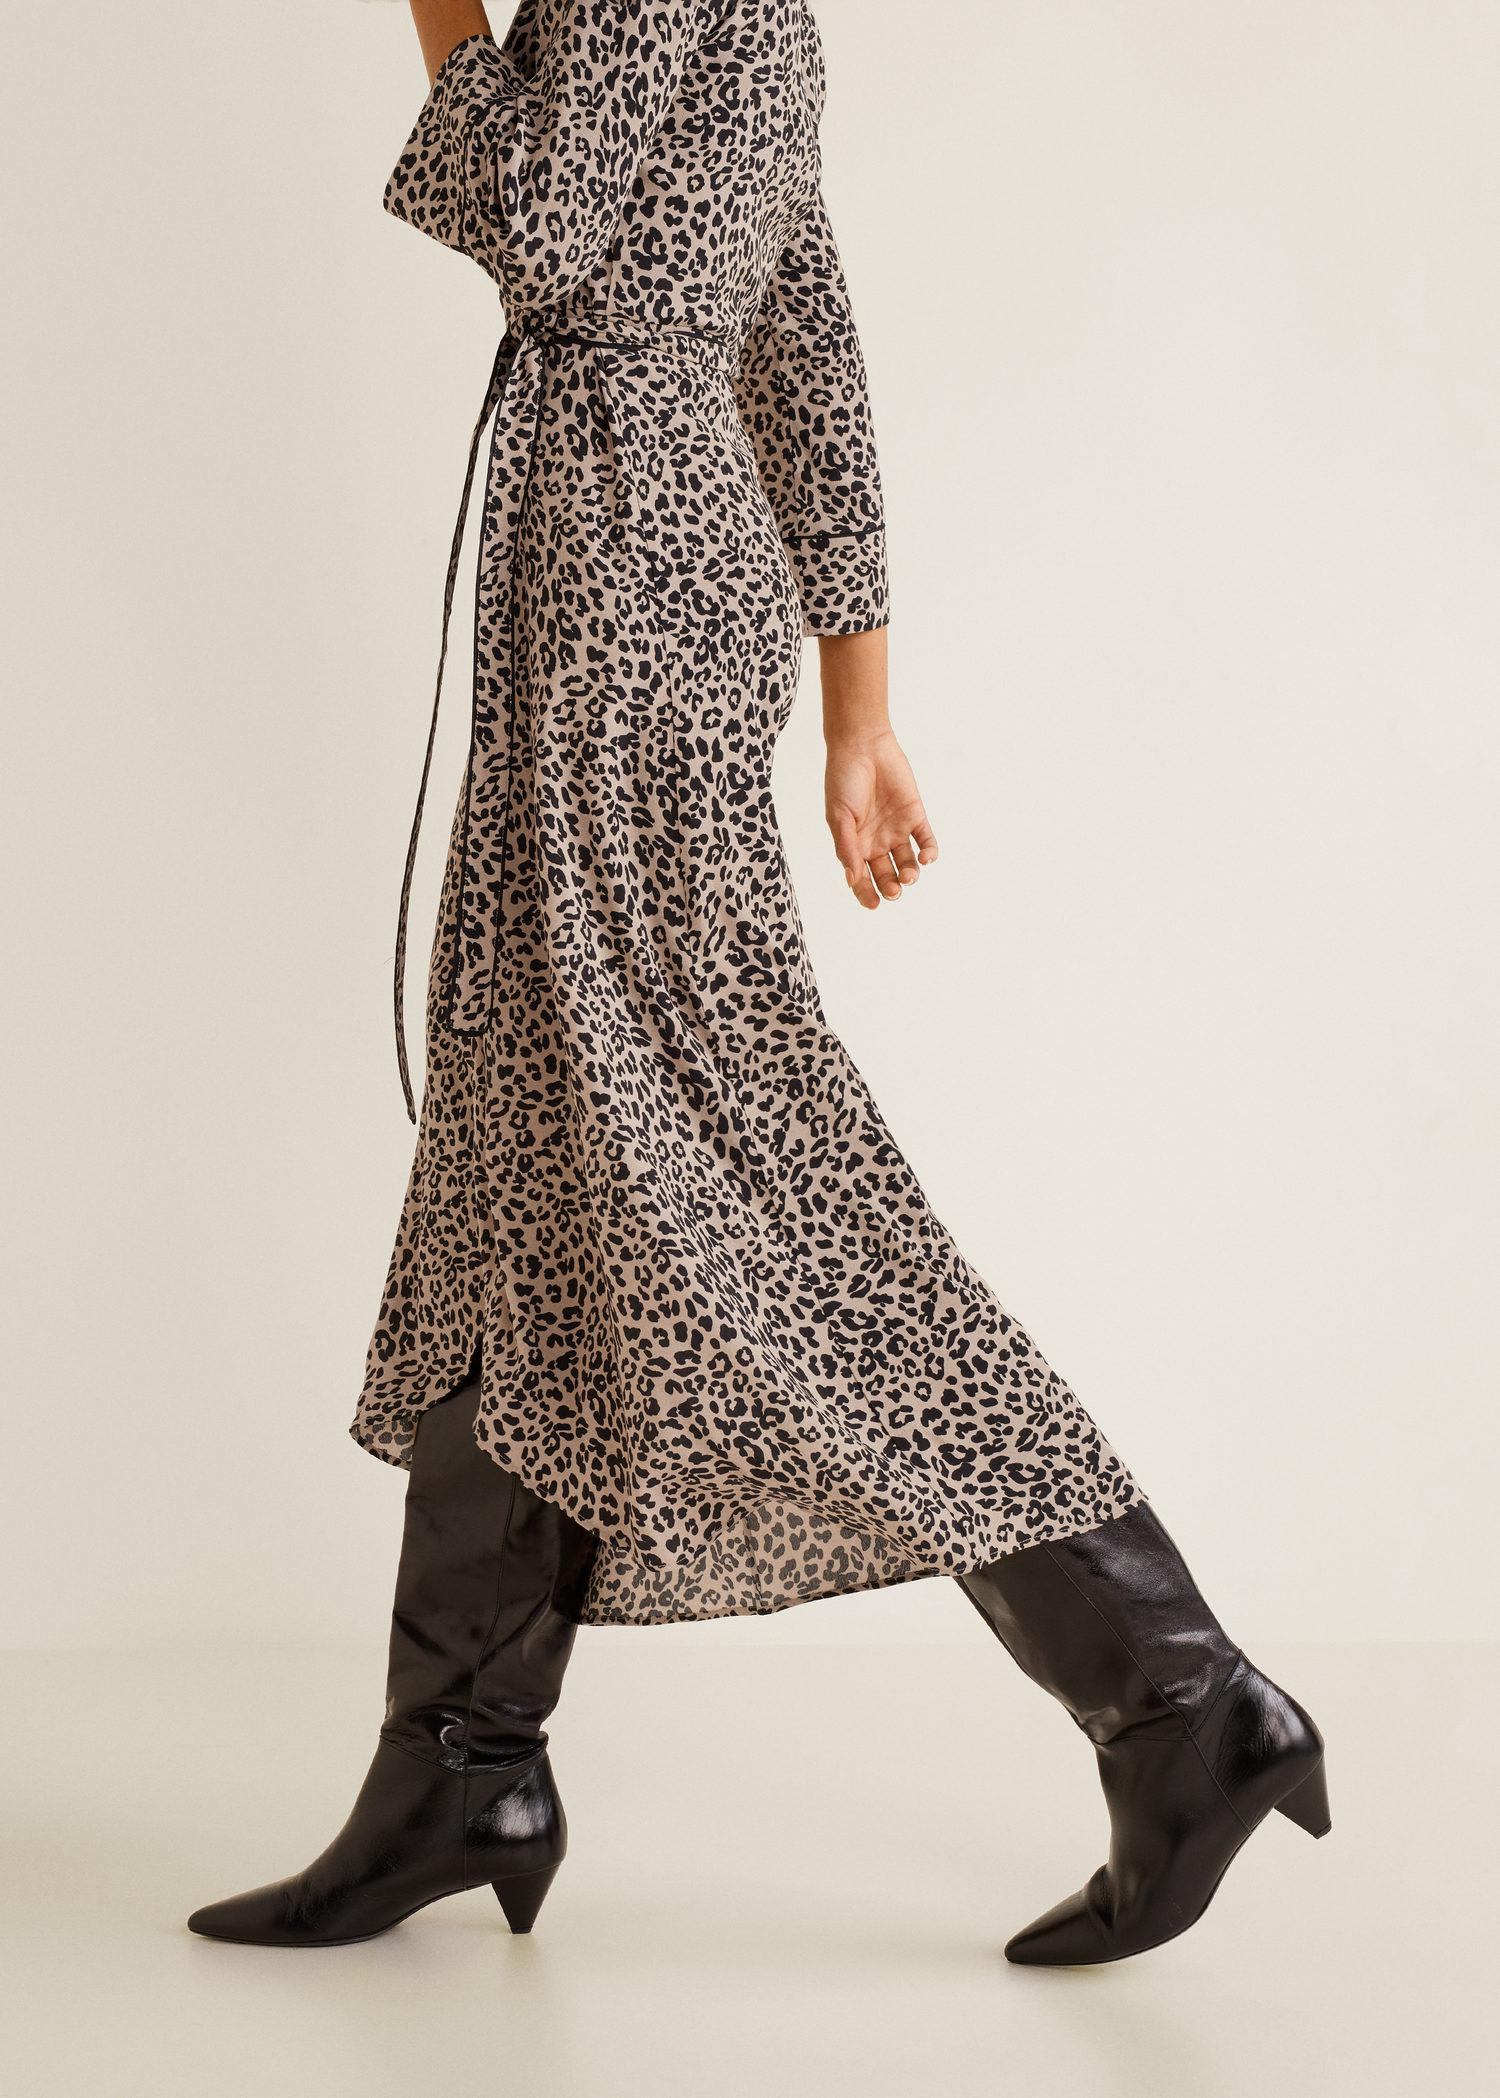 black dress with leopard print